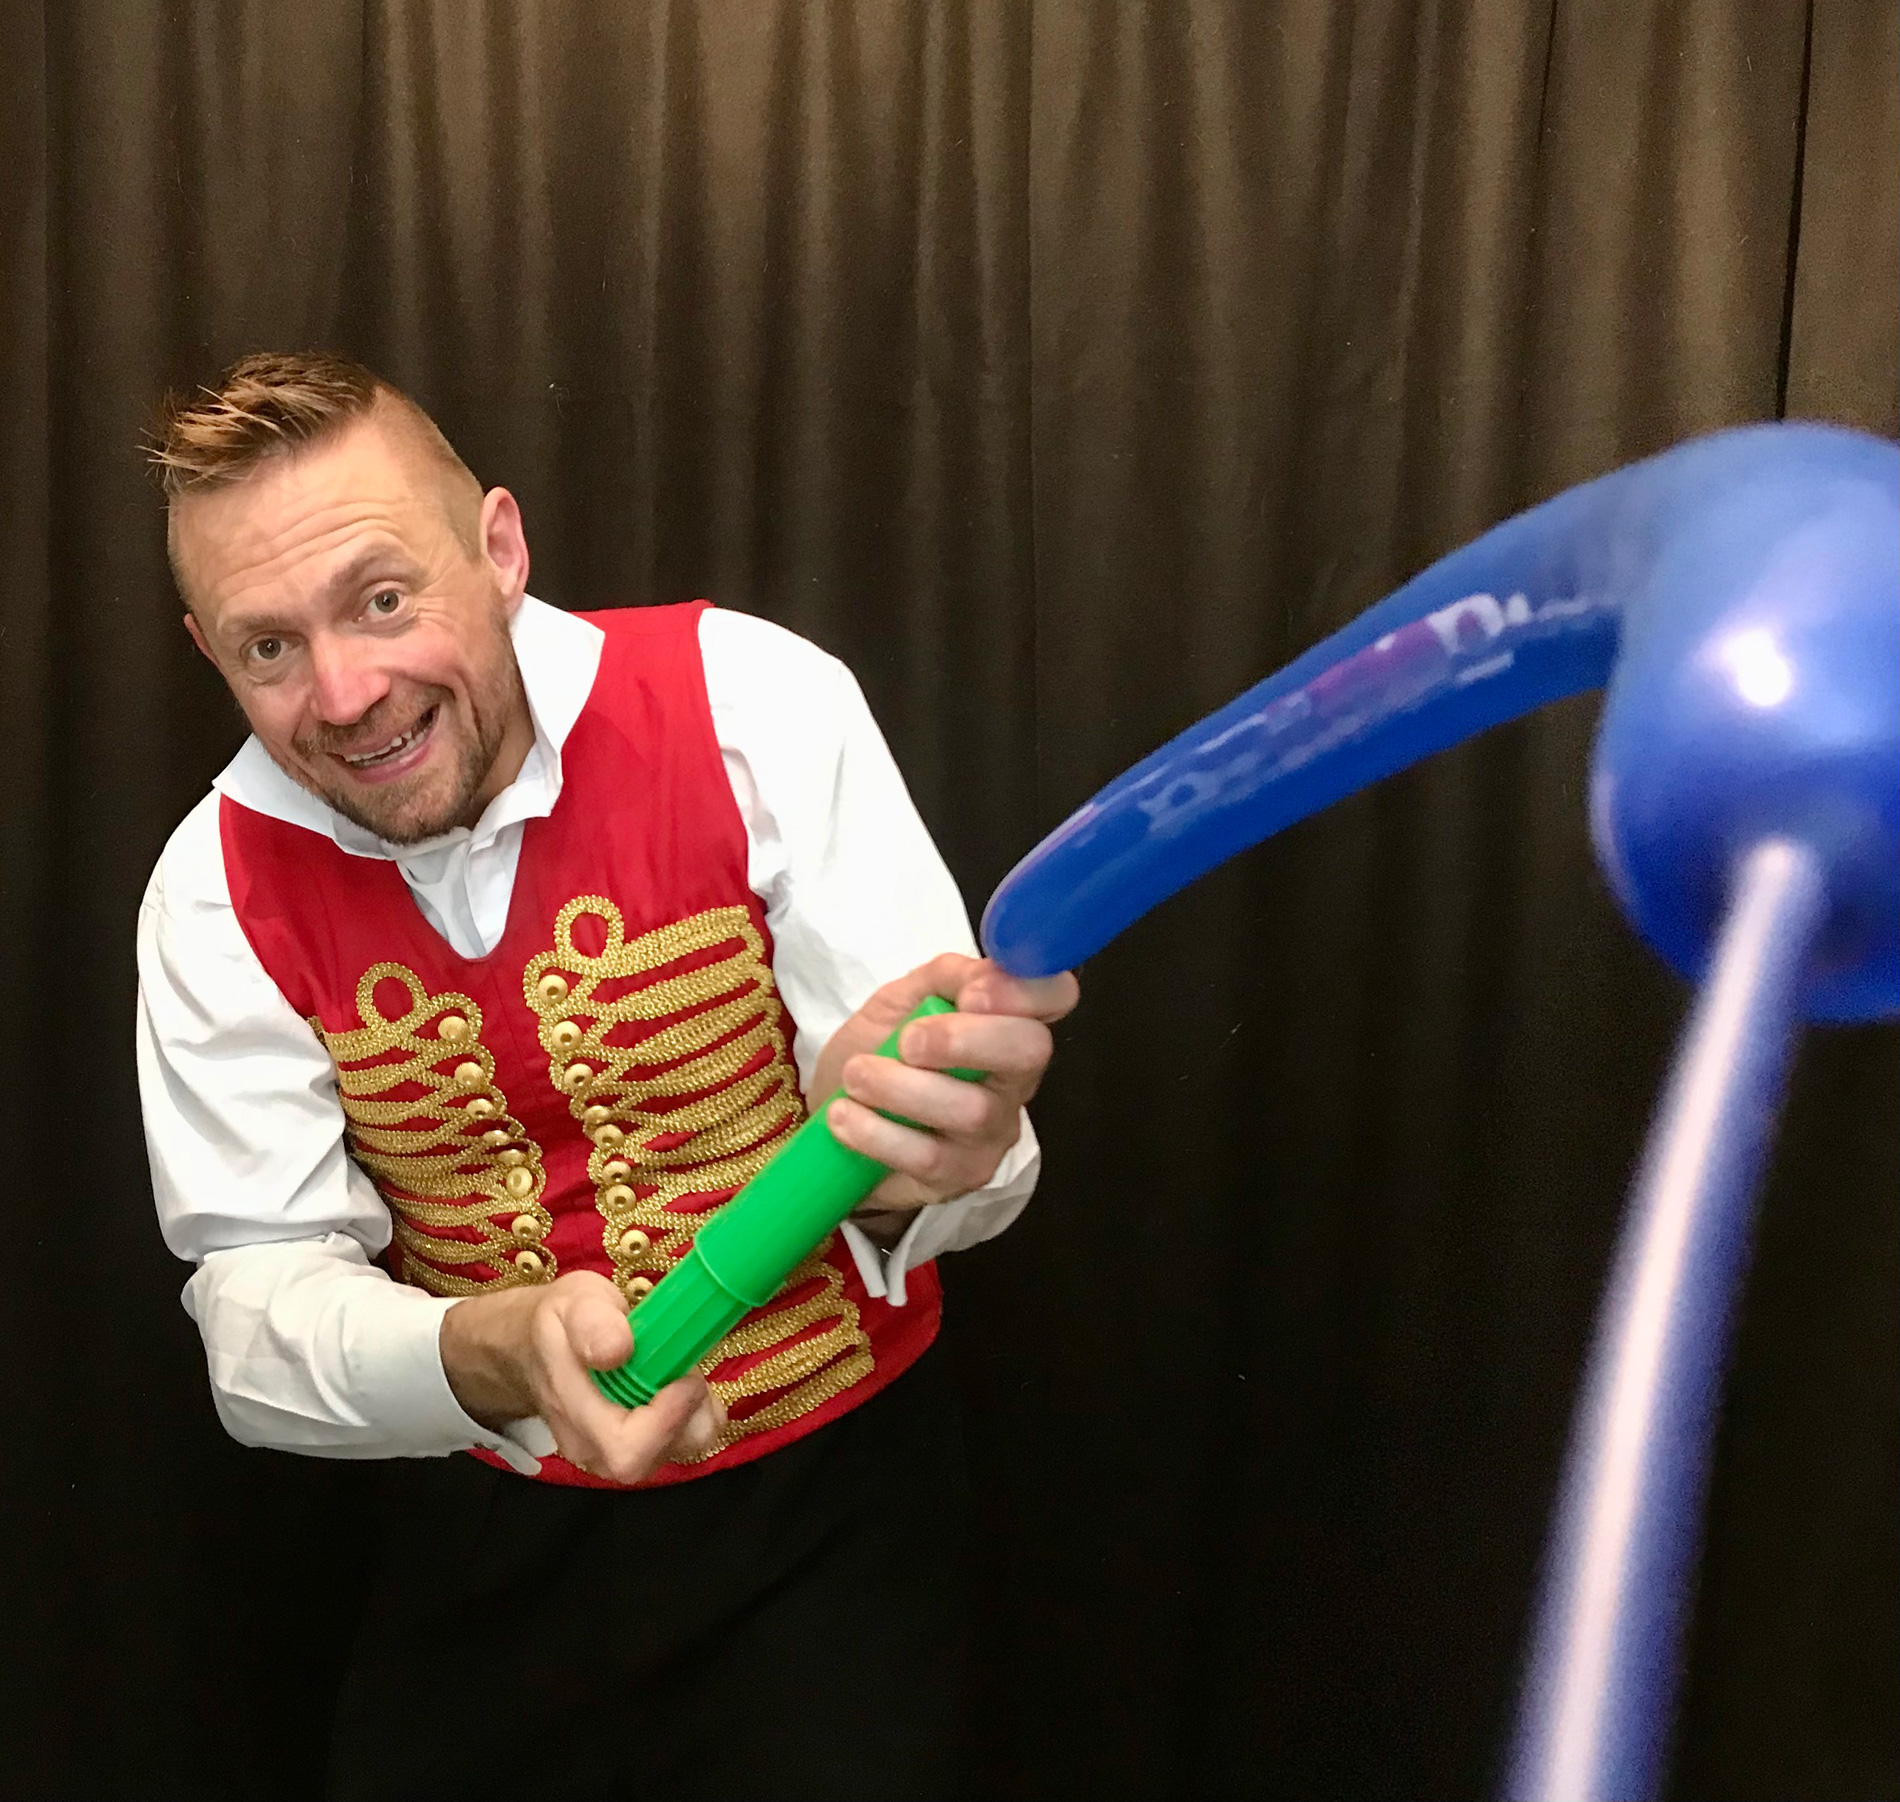 Thomas Trilby online shows circus skills performer